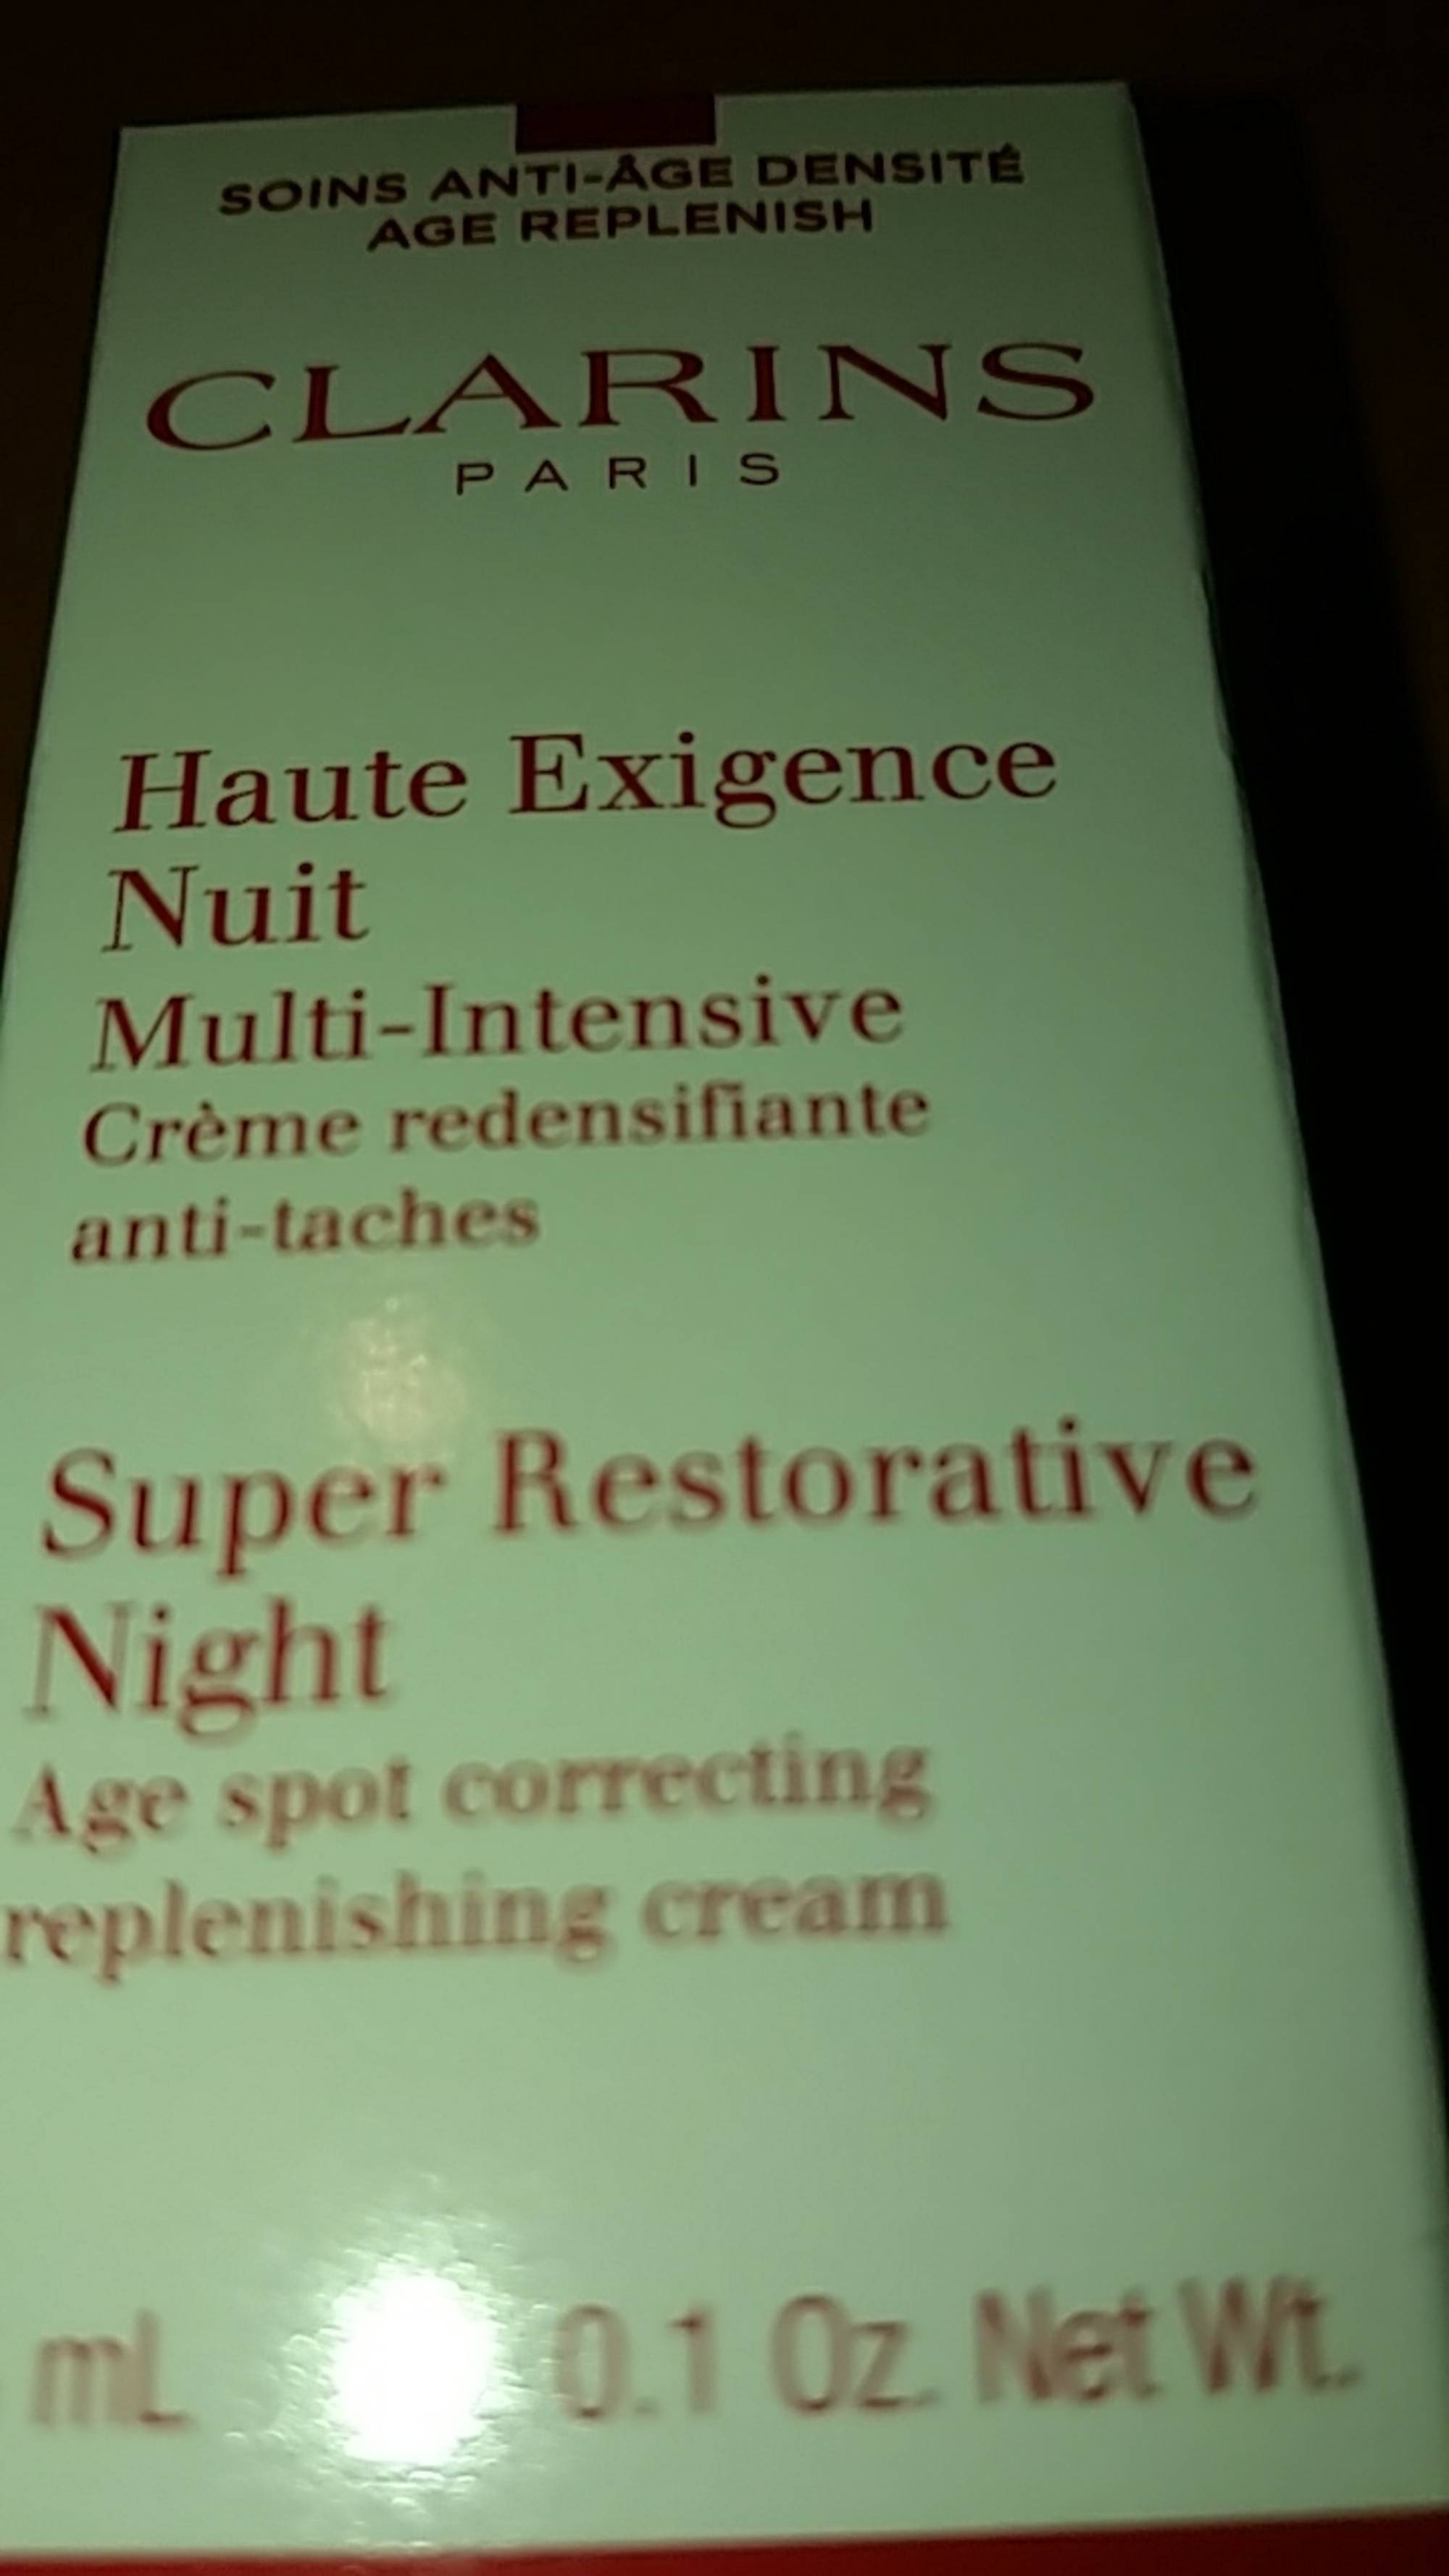 CLARINS - Haute exigence nuit multi-intensive - Crème redensifiante anti-taches